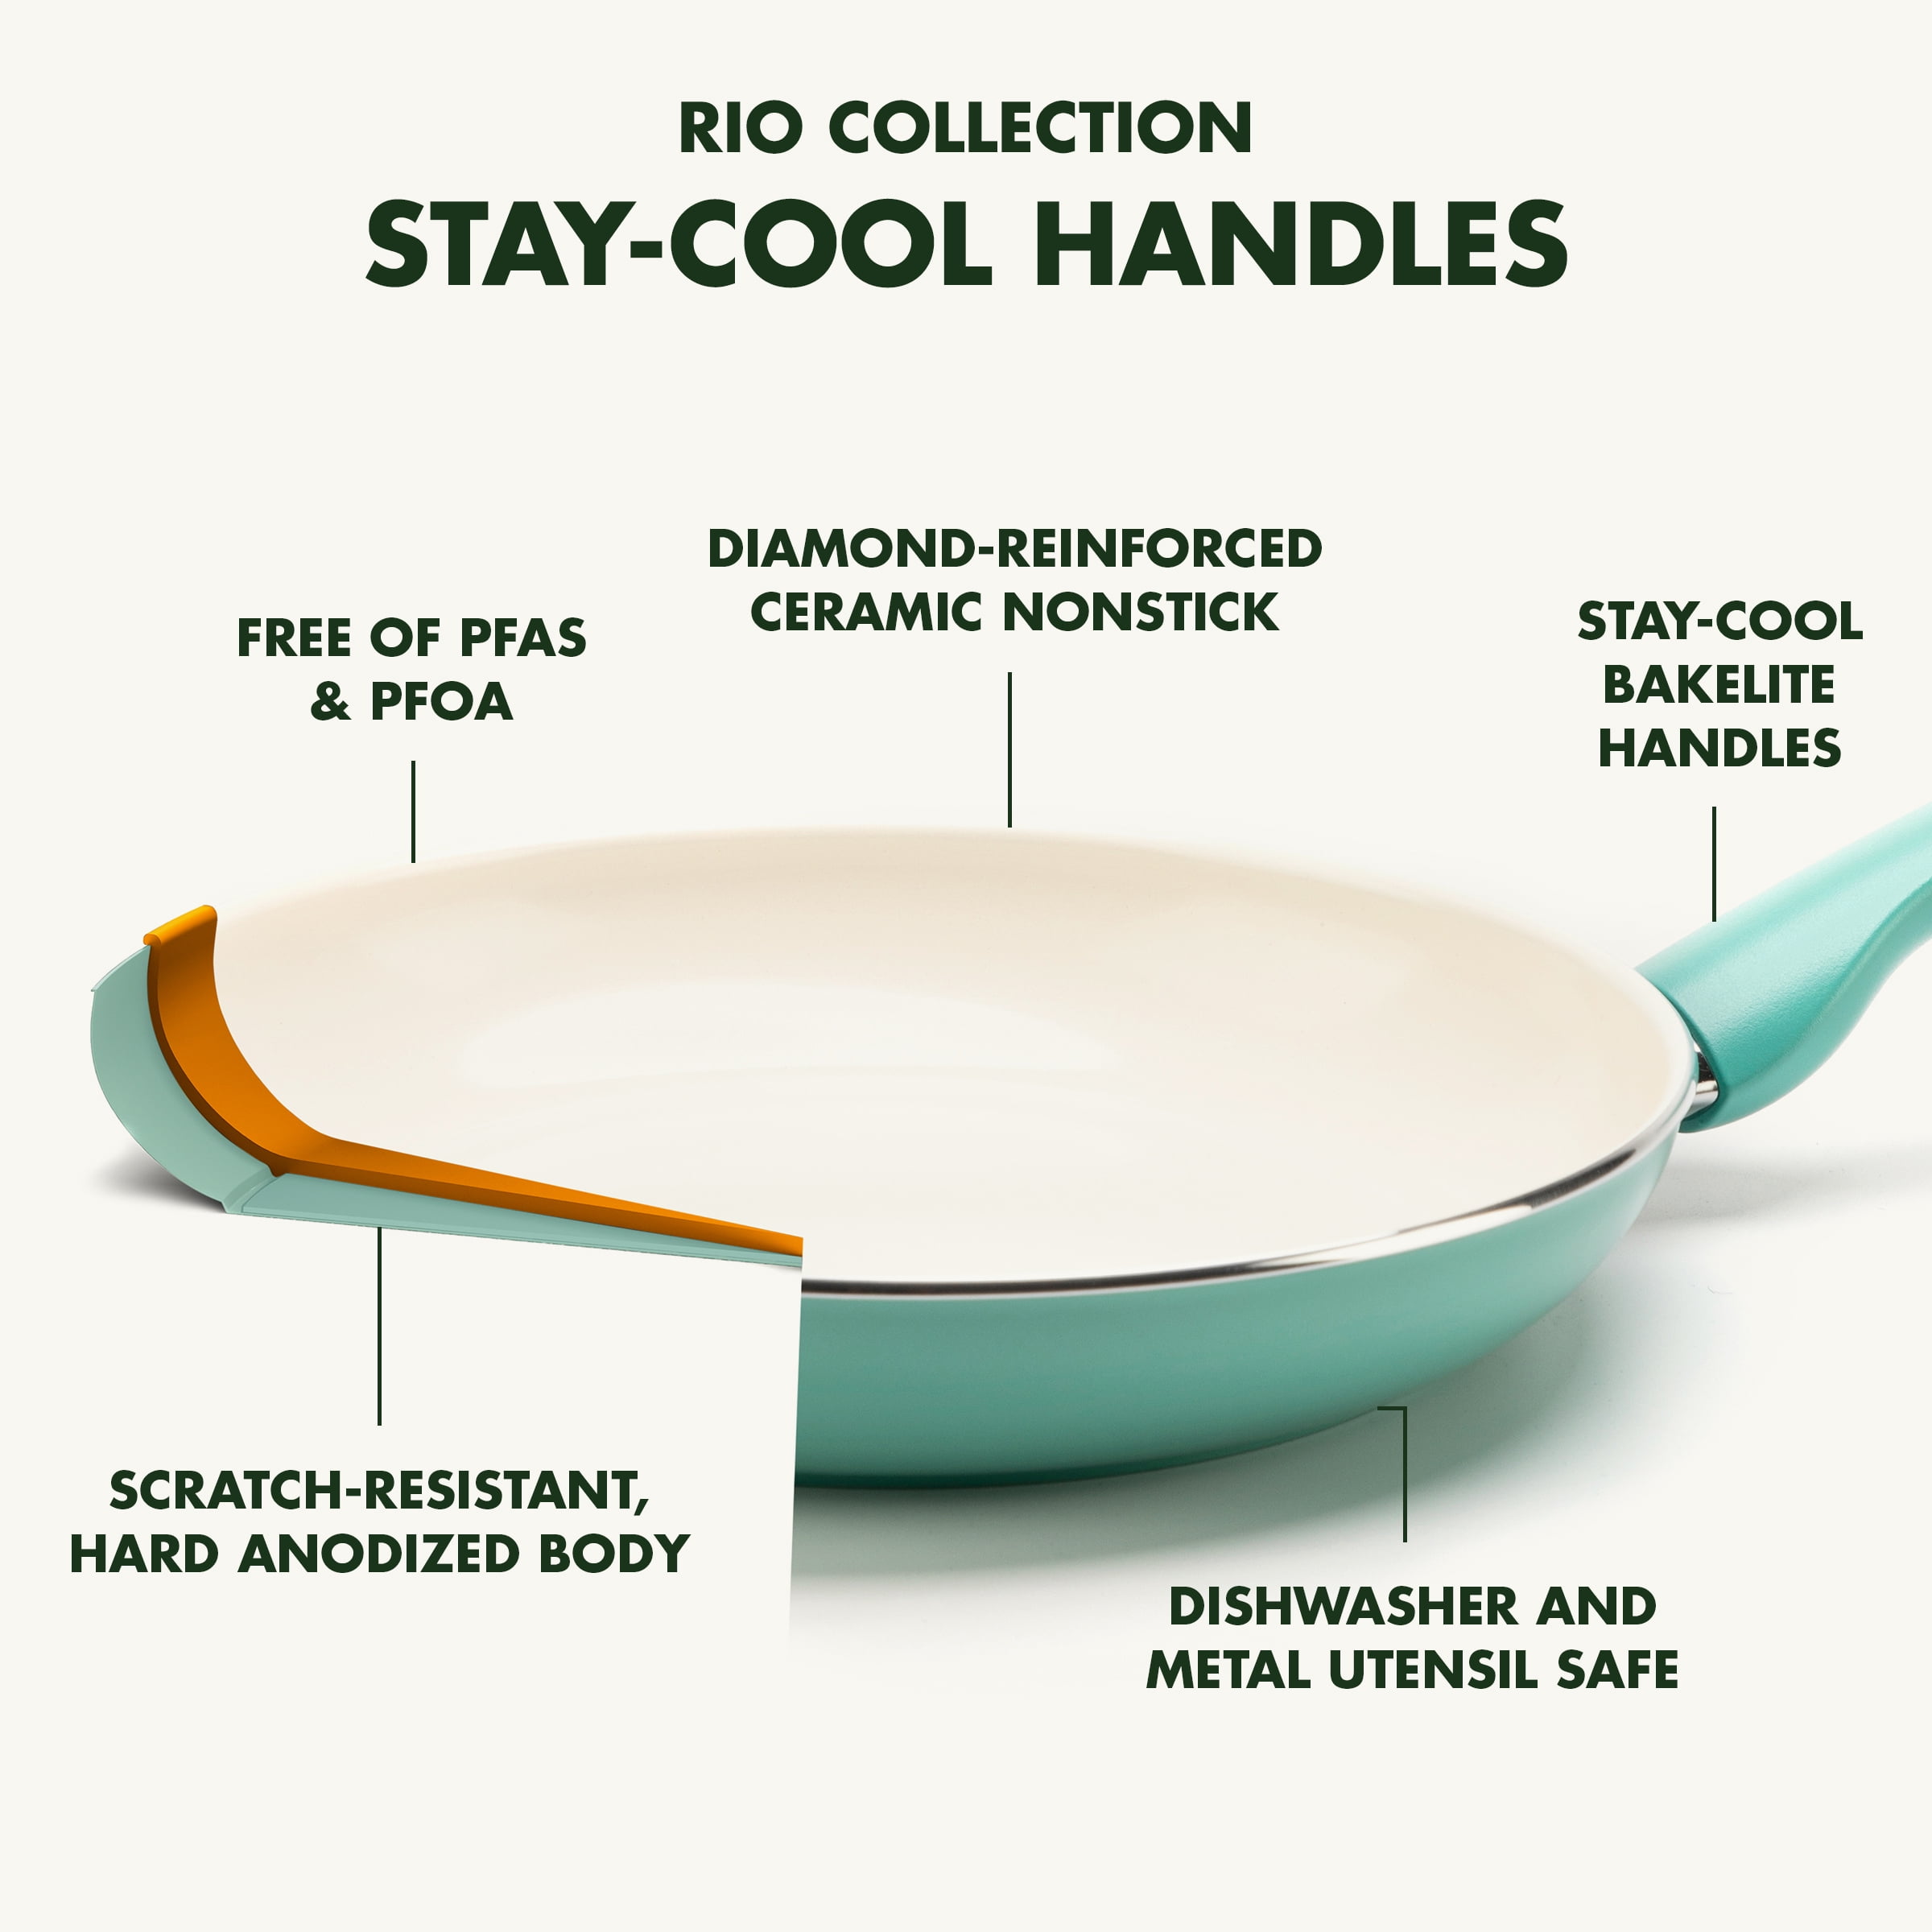 GreenPan Rio 16-Piece Turquoise with Cream Interior Cookware Set